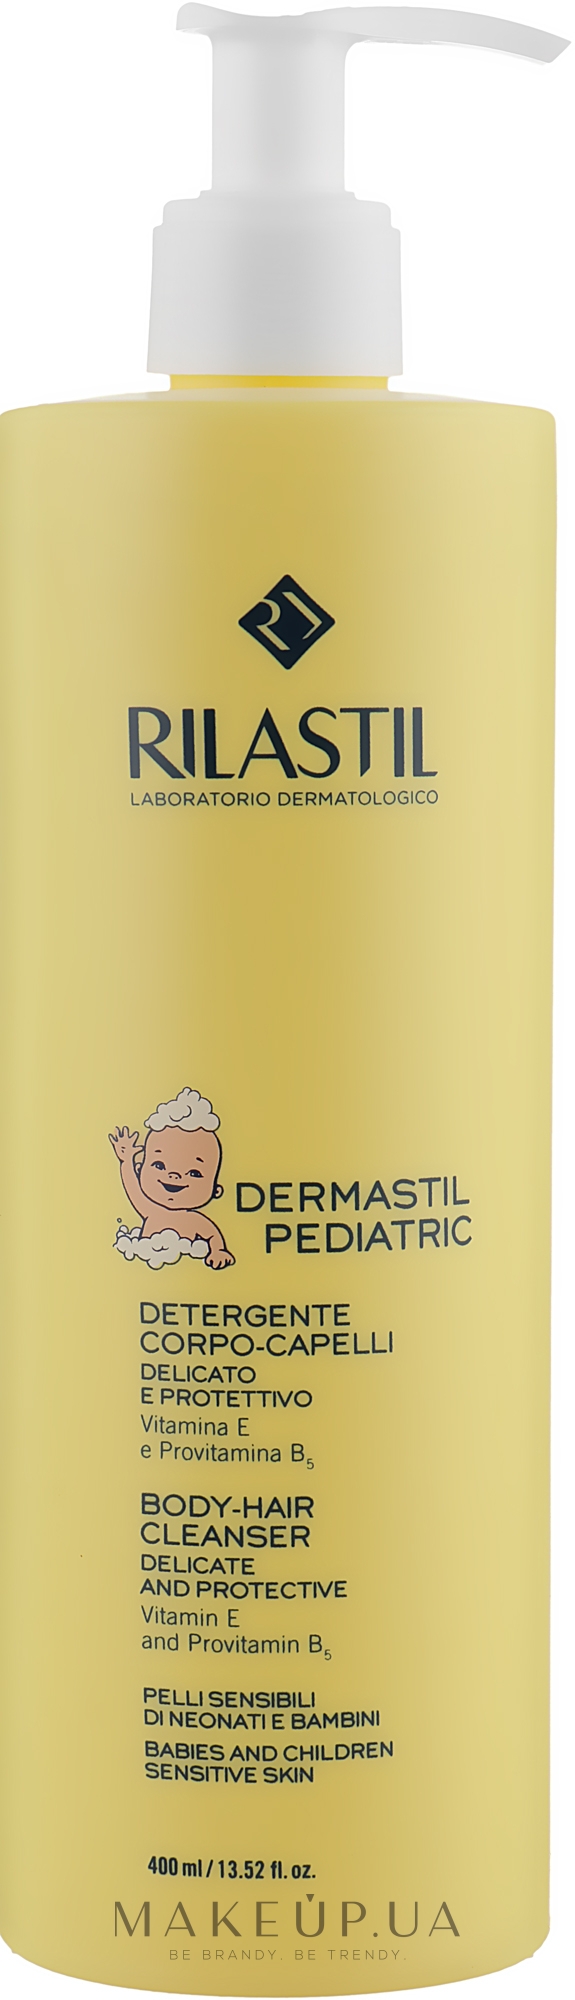 Дитячий гель для волосся й тіла - Rilastil Dermastil Pediatric Body-Hair Cleanser — фото 400ml